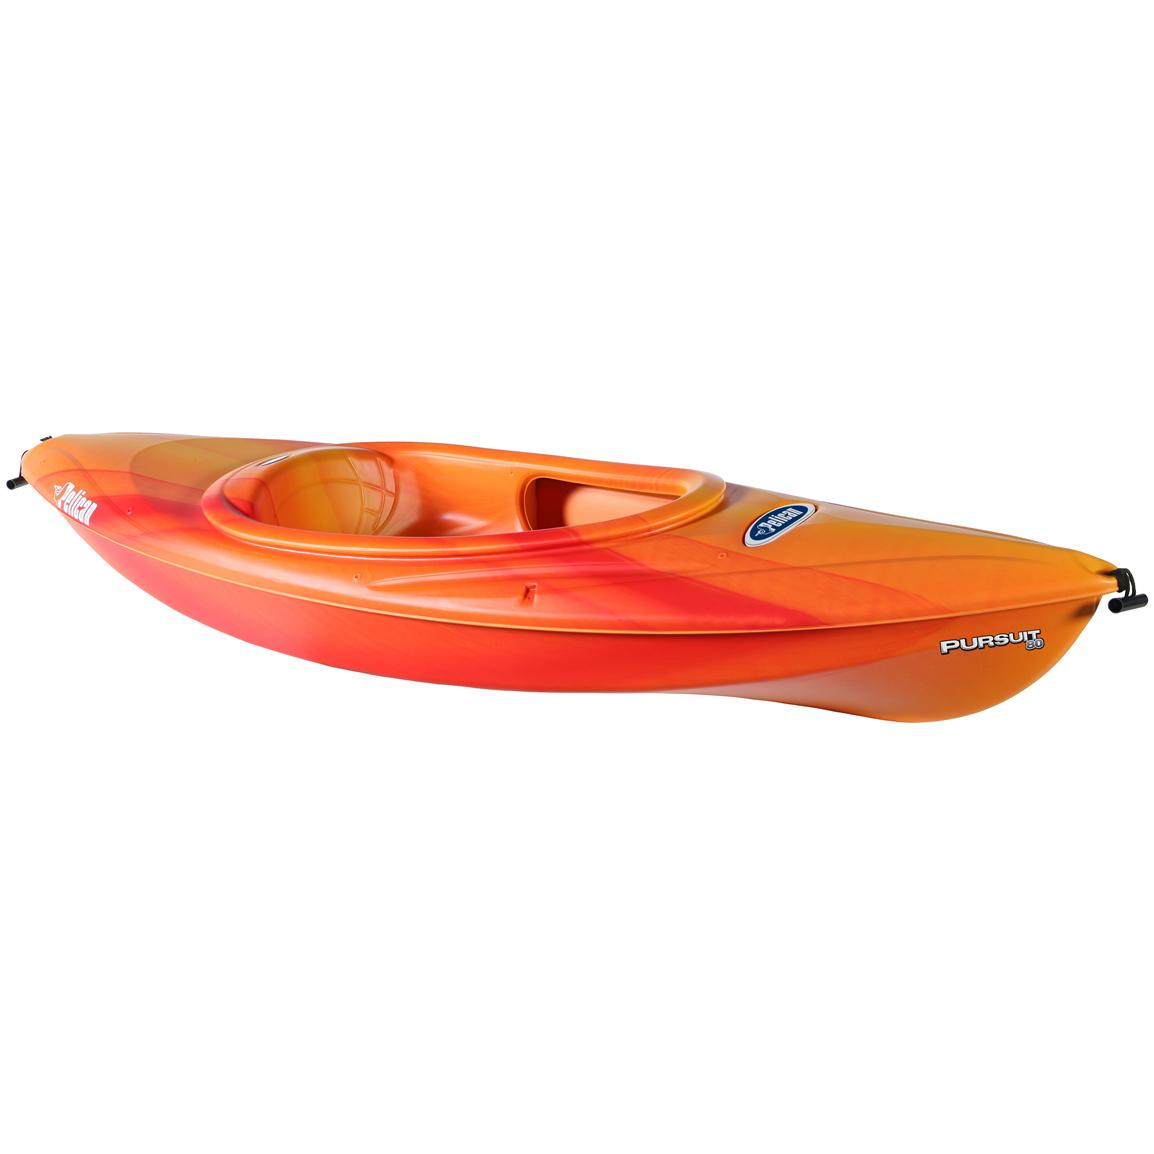 Pelican™ Pursuit 80 Kayak - 220050, Canoes & Kayaks at Sportsman's Guide1154 x 1154